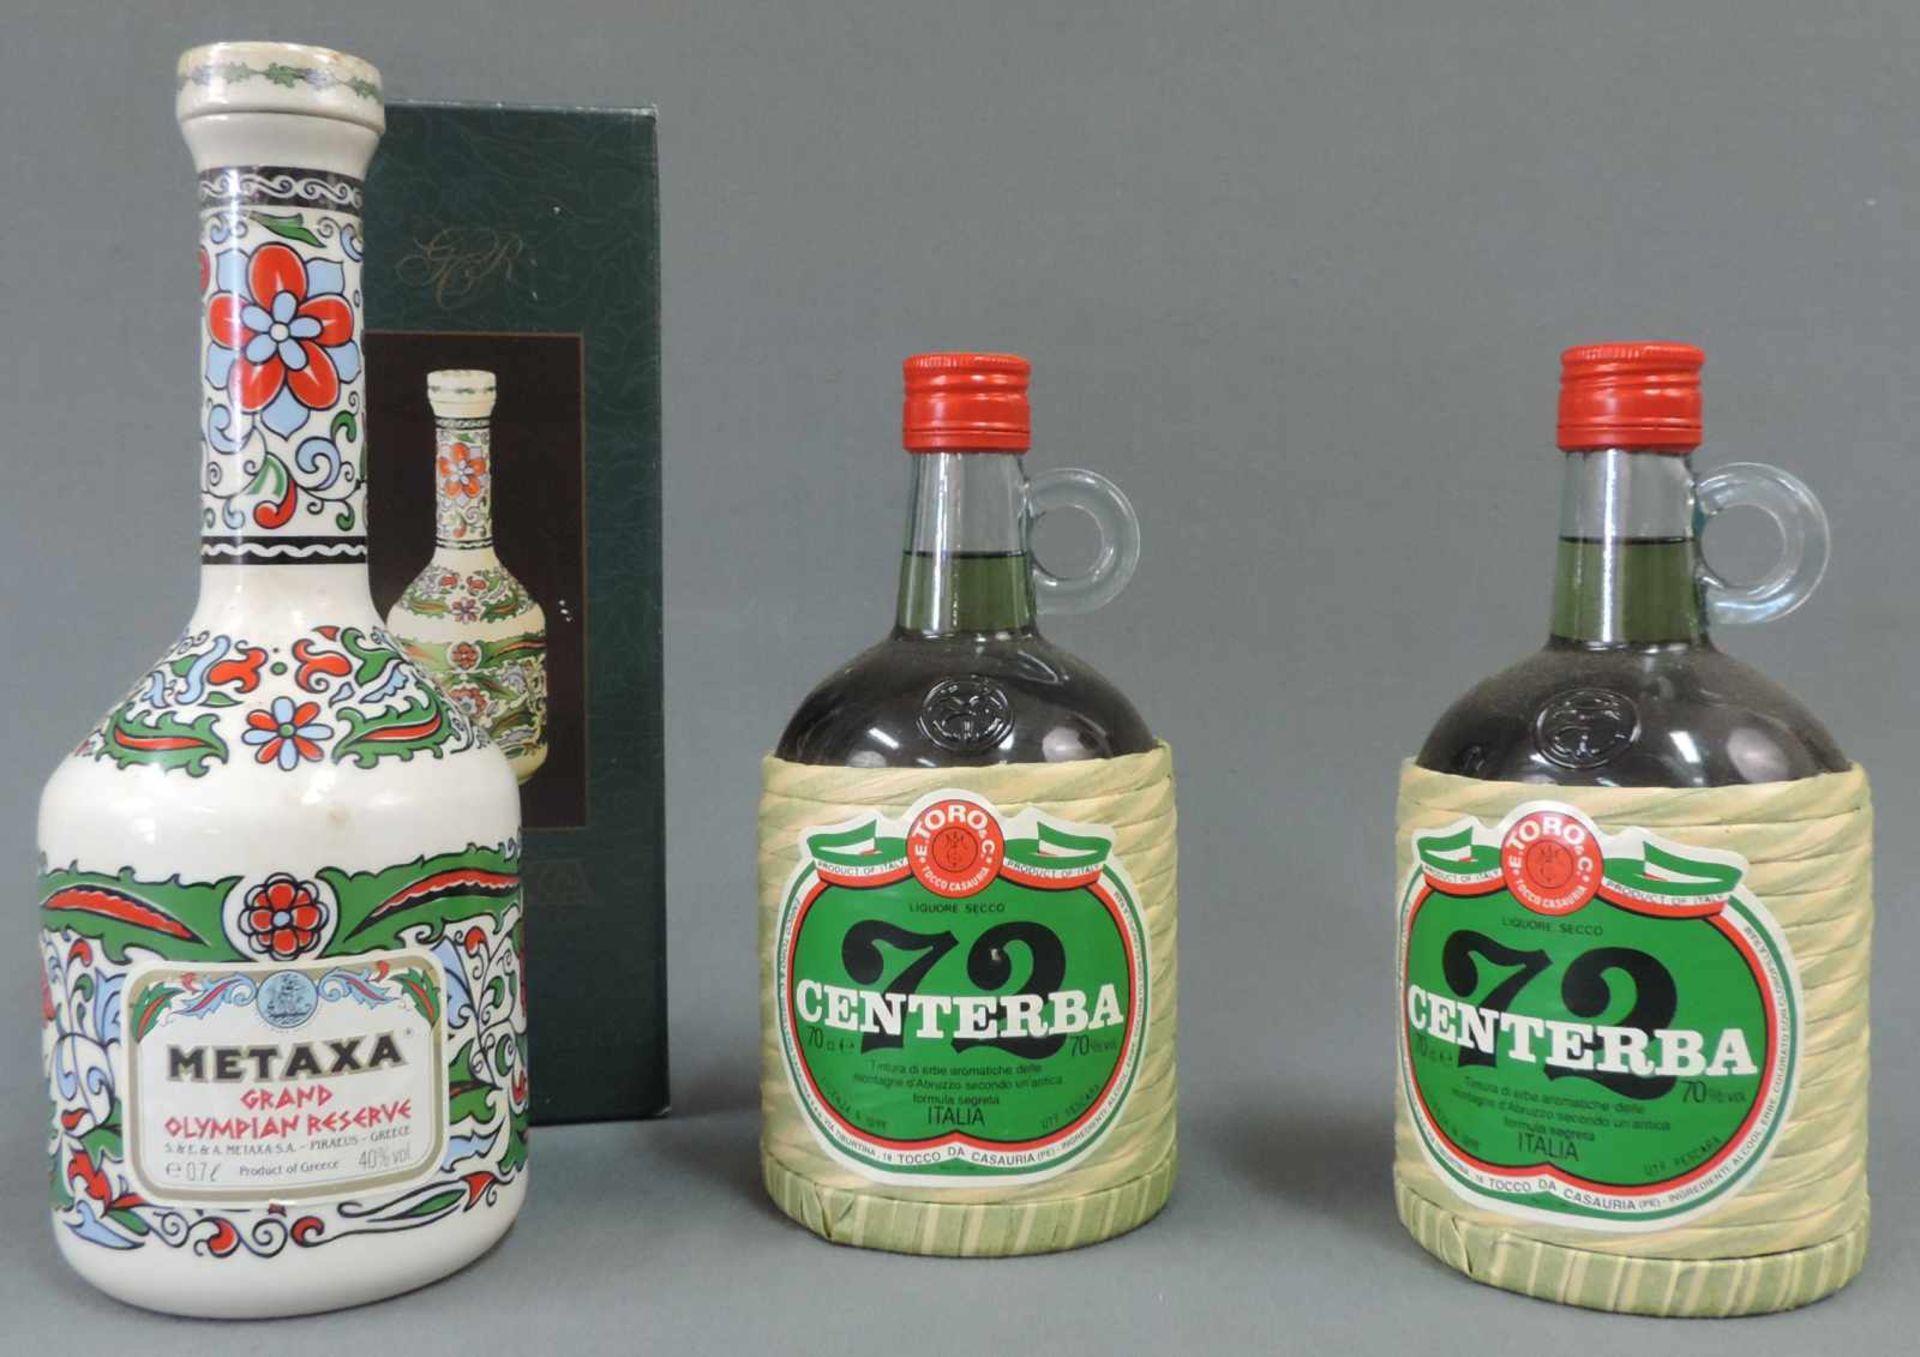 Metaxa Grand Olympian Reserve, Keramikflasche um 1980? 70 cl 40%. Dazu 2 Flaschen Centerba 72